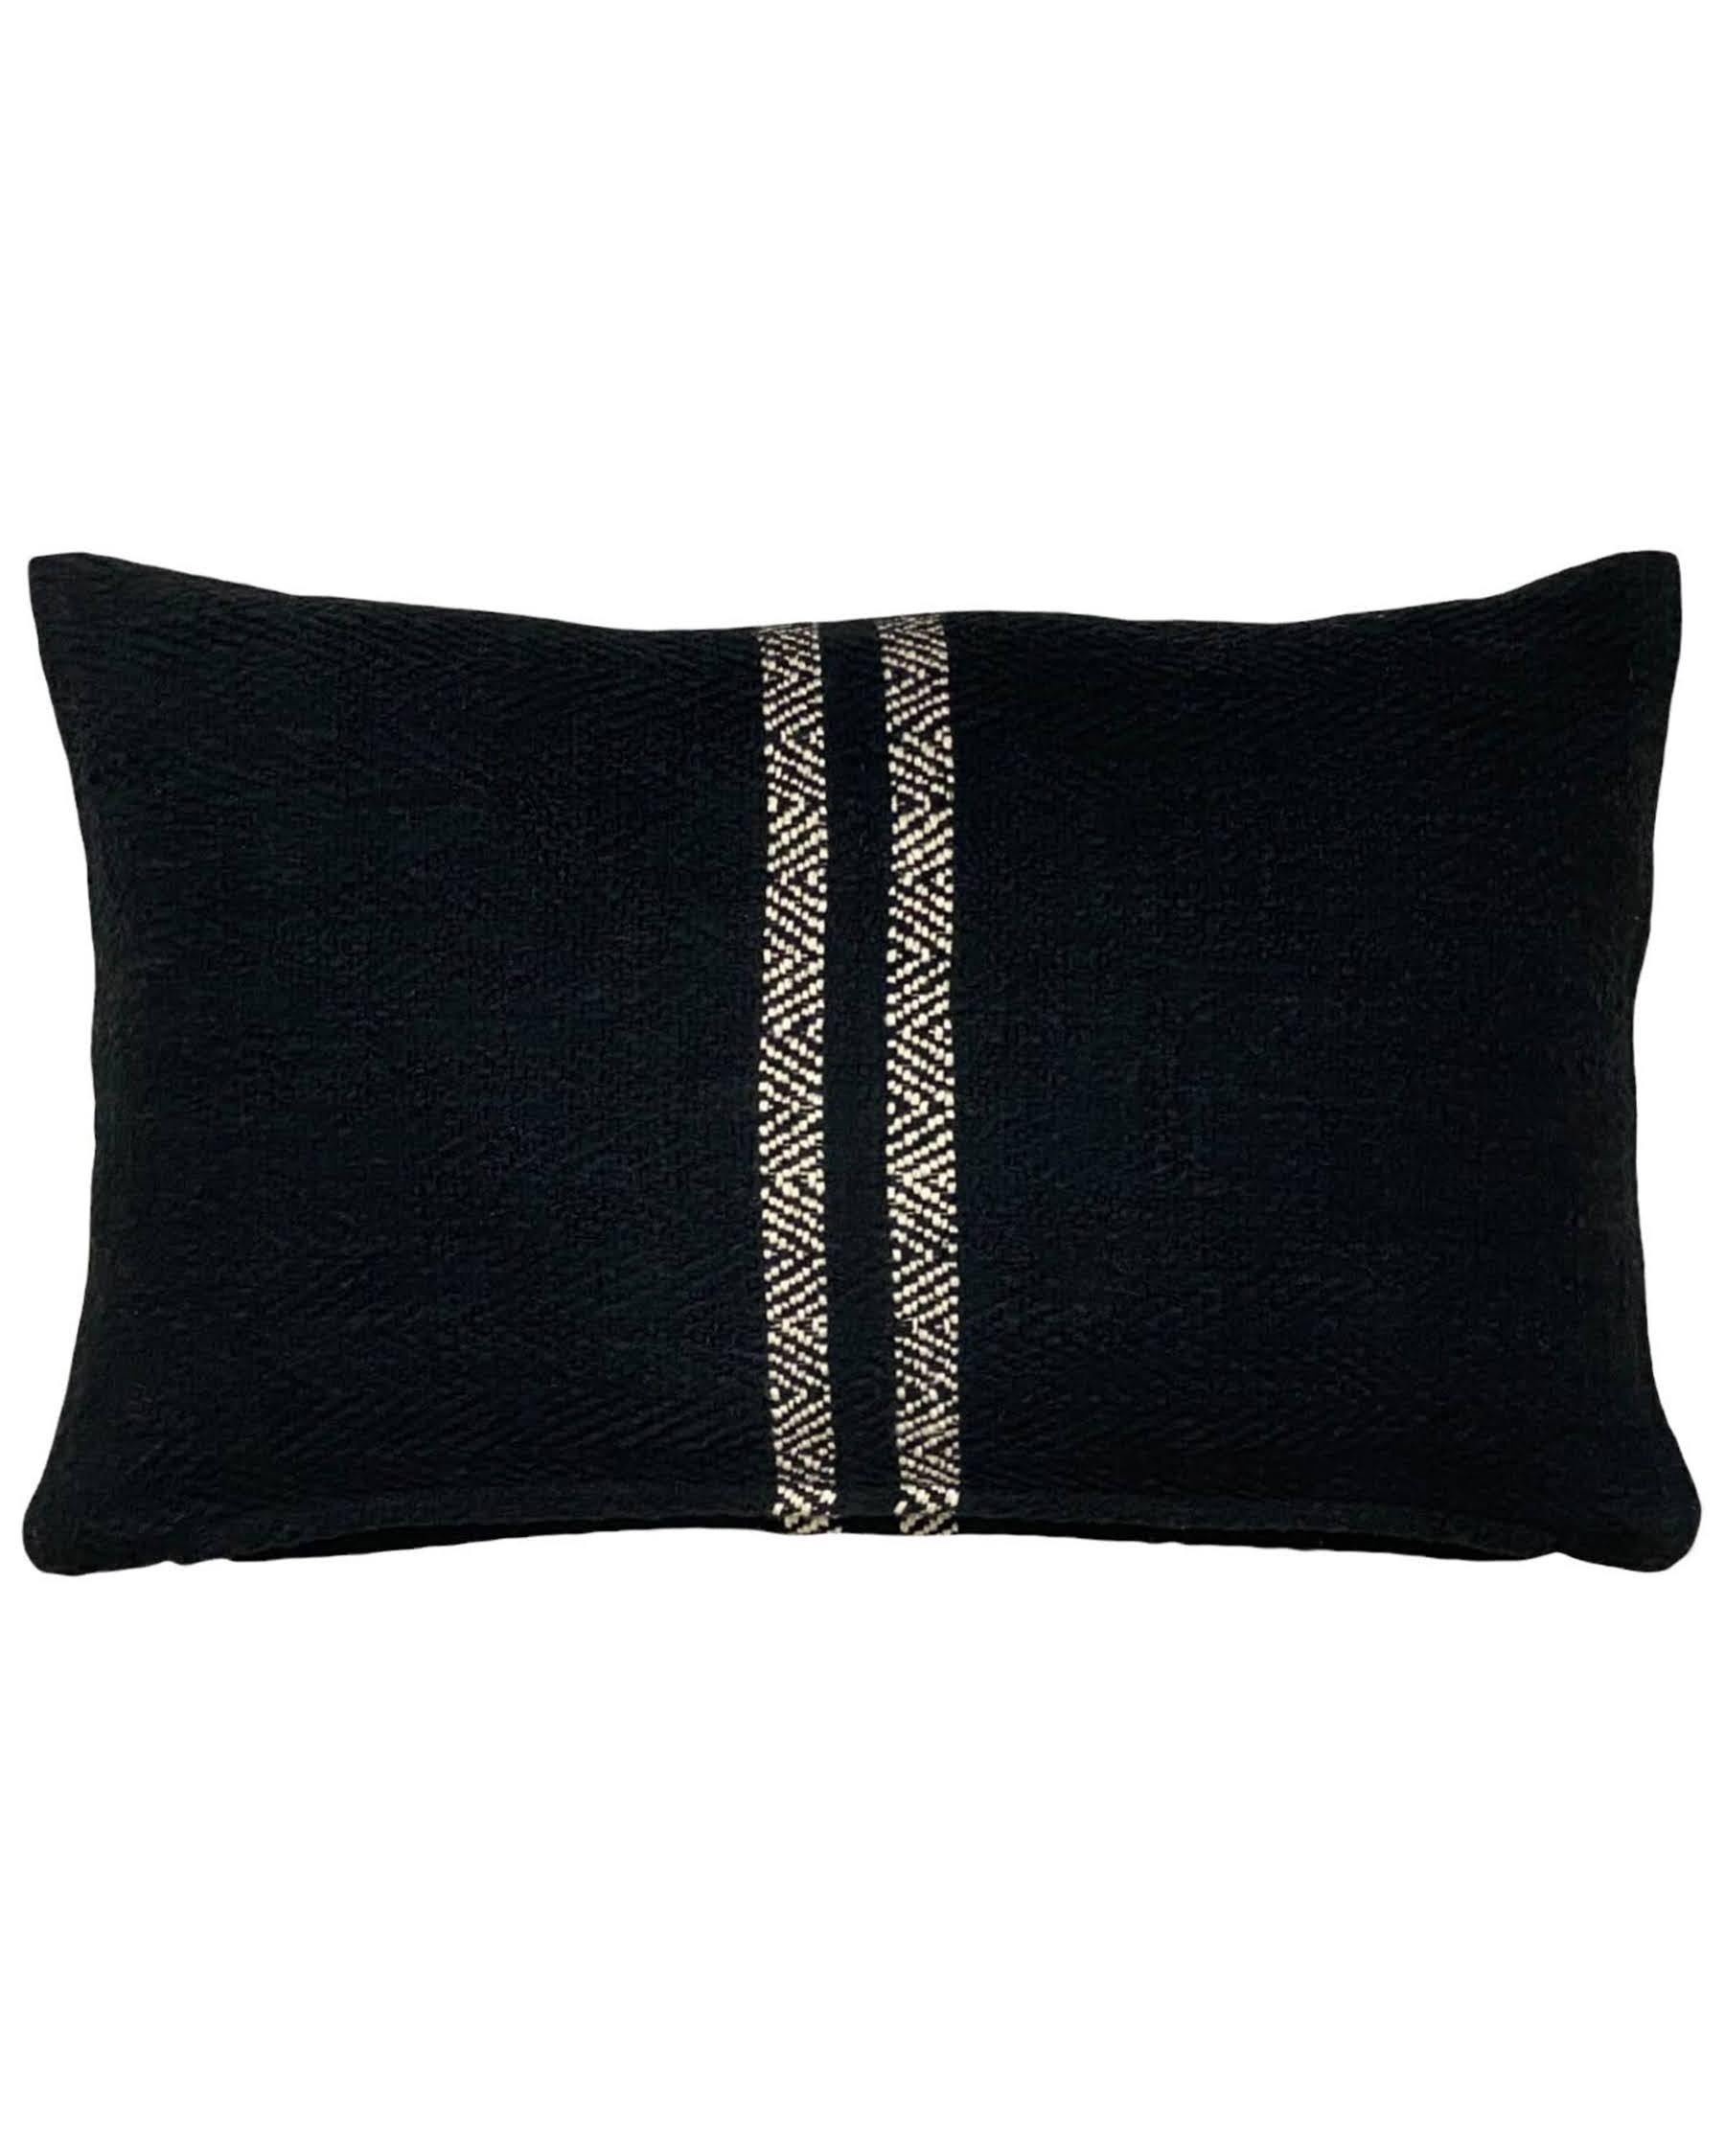 PILLOWPIA hugh lumbar pillow black / cover only